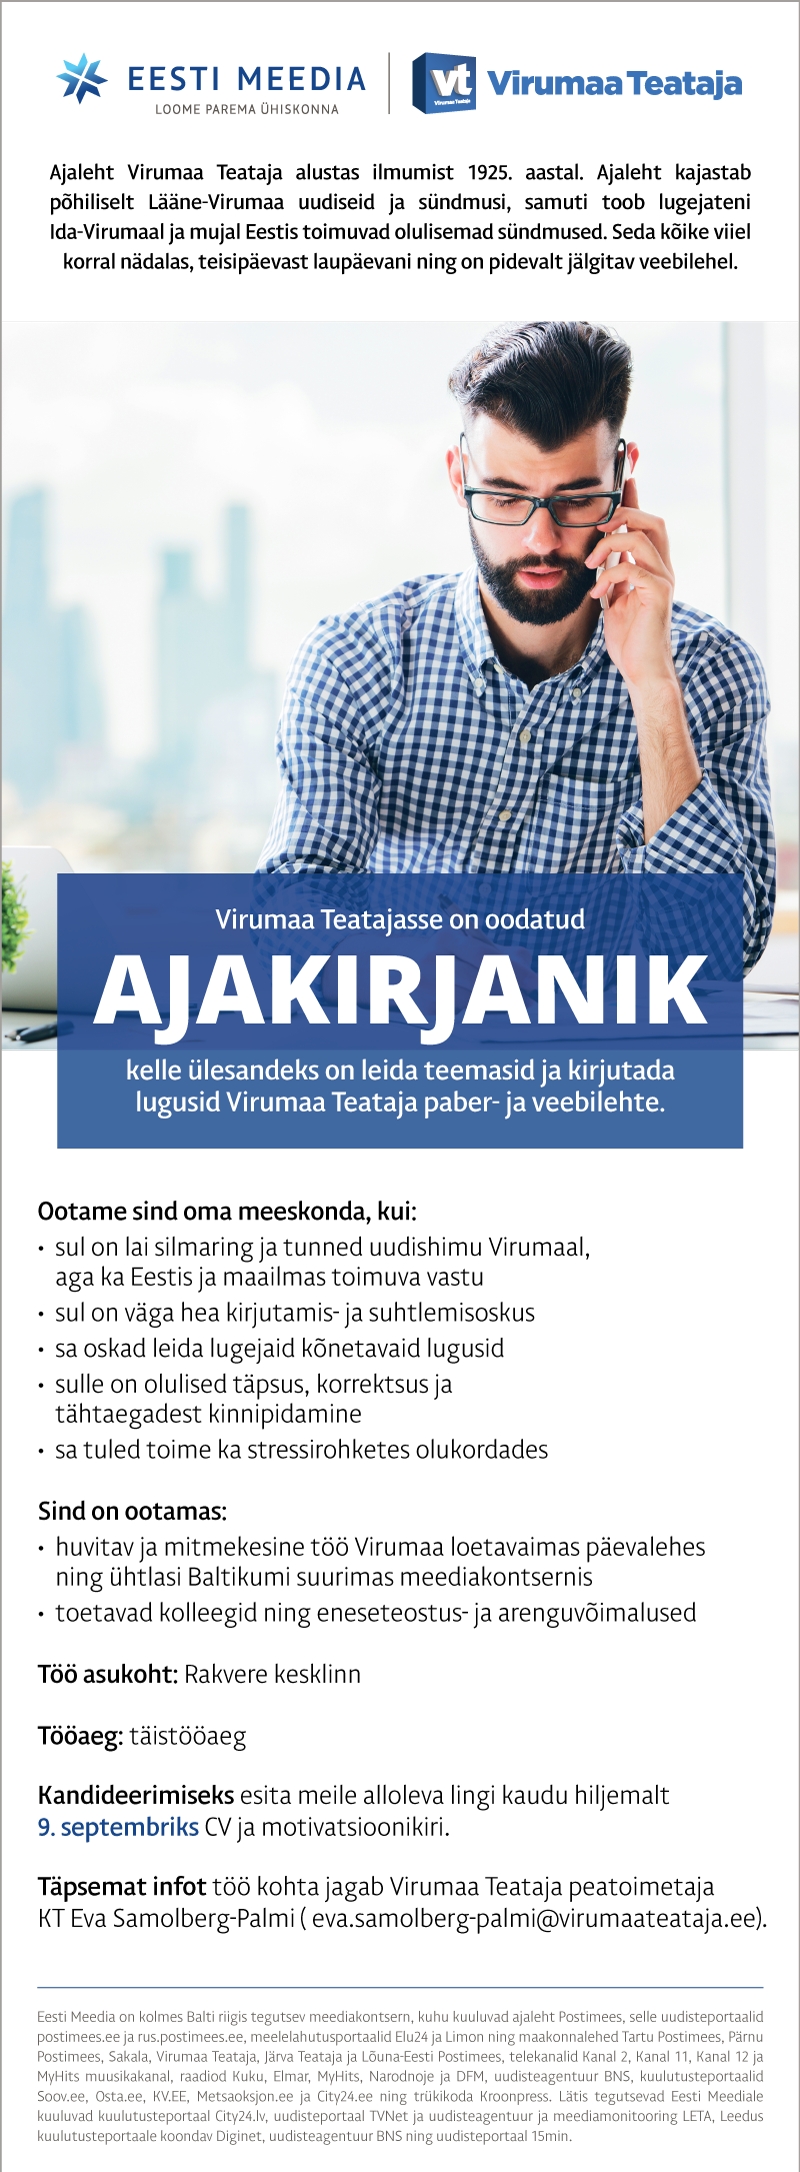 Eesti Meedia Virumaa Teataja ajakirjanik